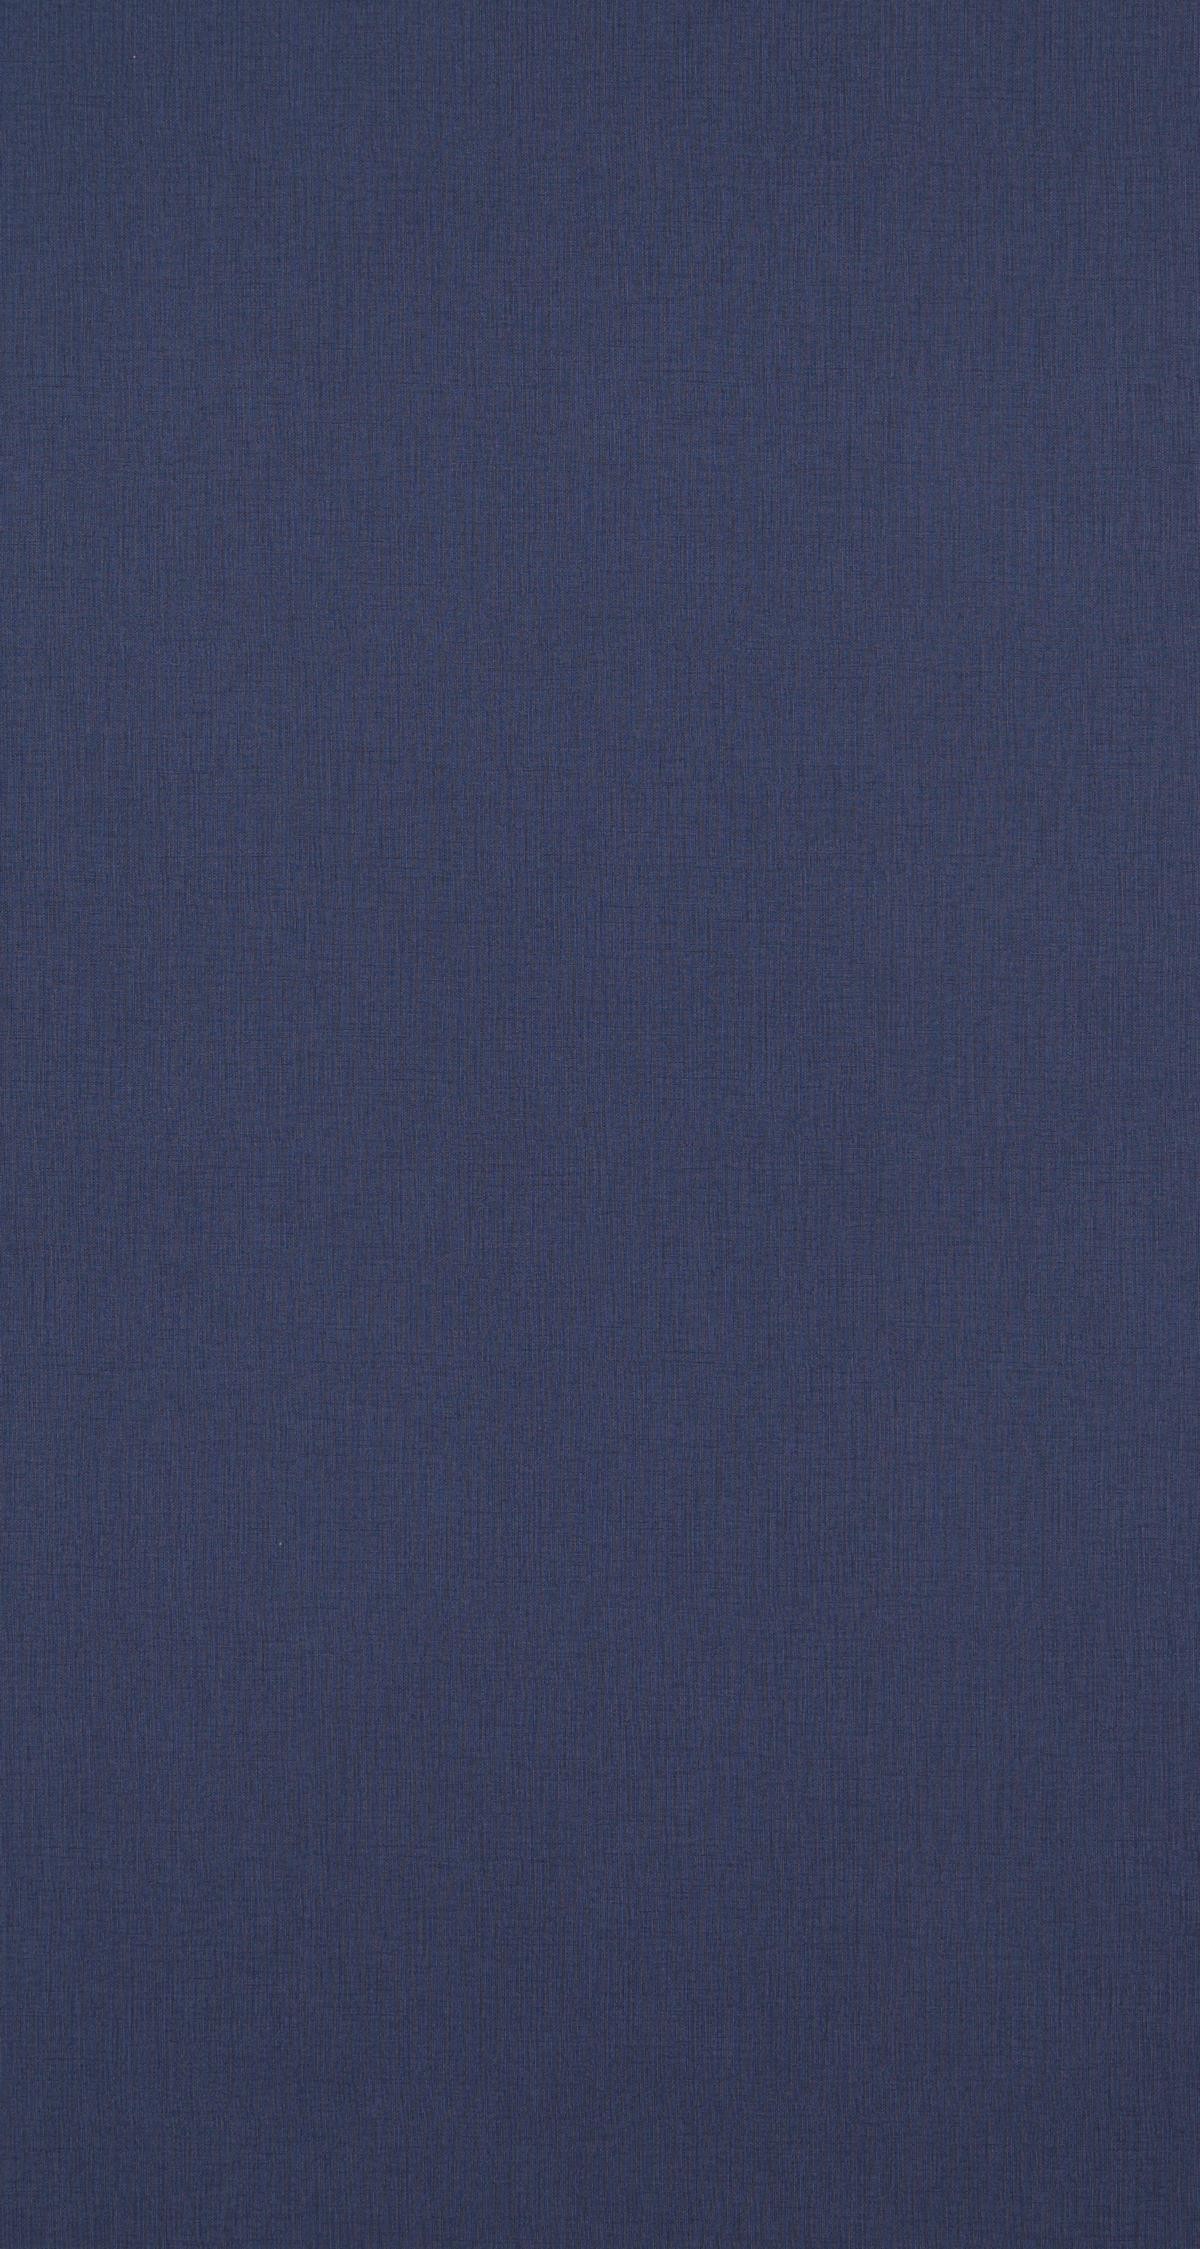 Featured image of post Dark Navy Blue Iphone Wallpaper